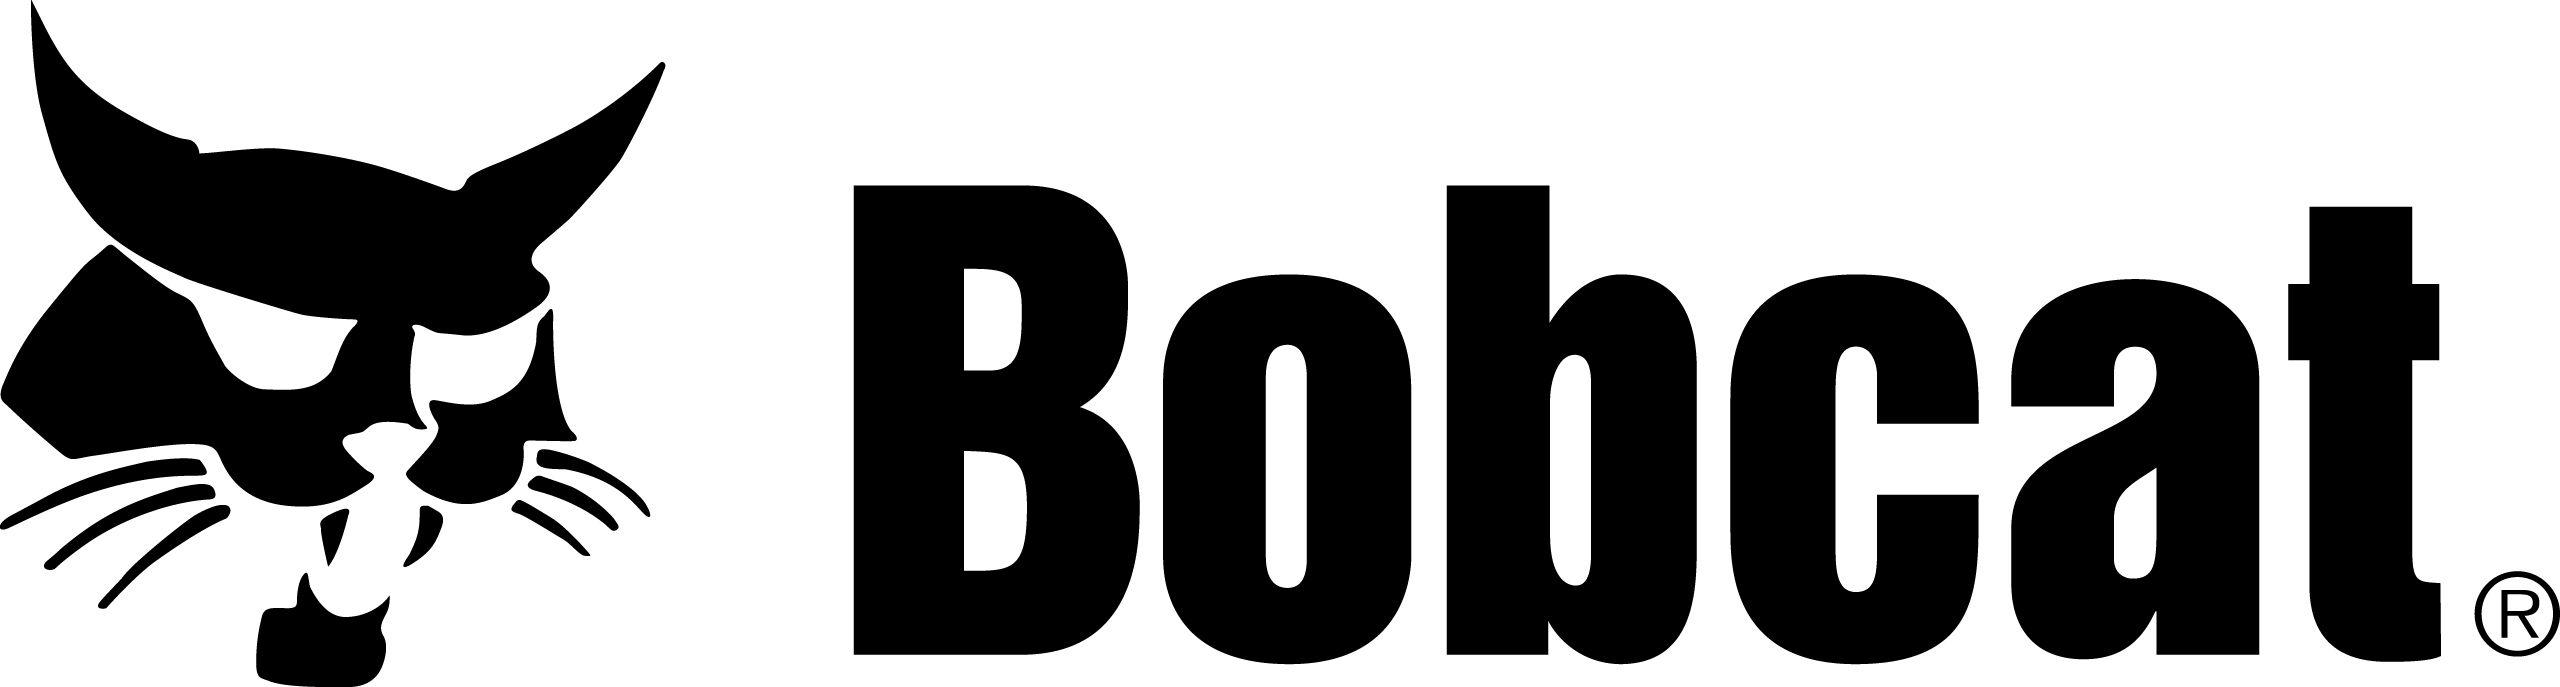 Bobcat Company Logo - Bobcat Equipment